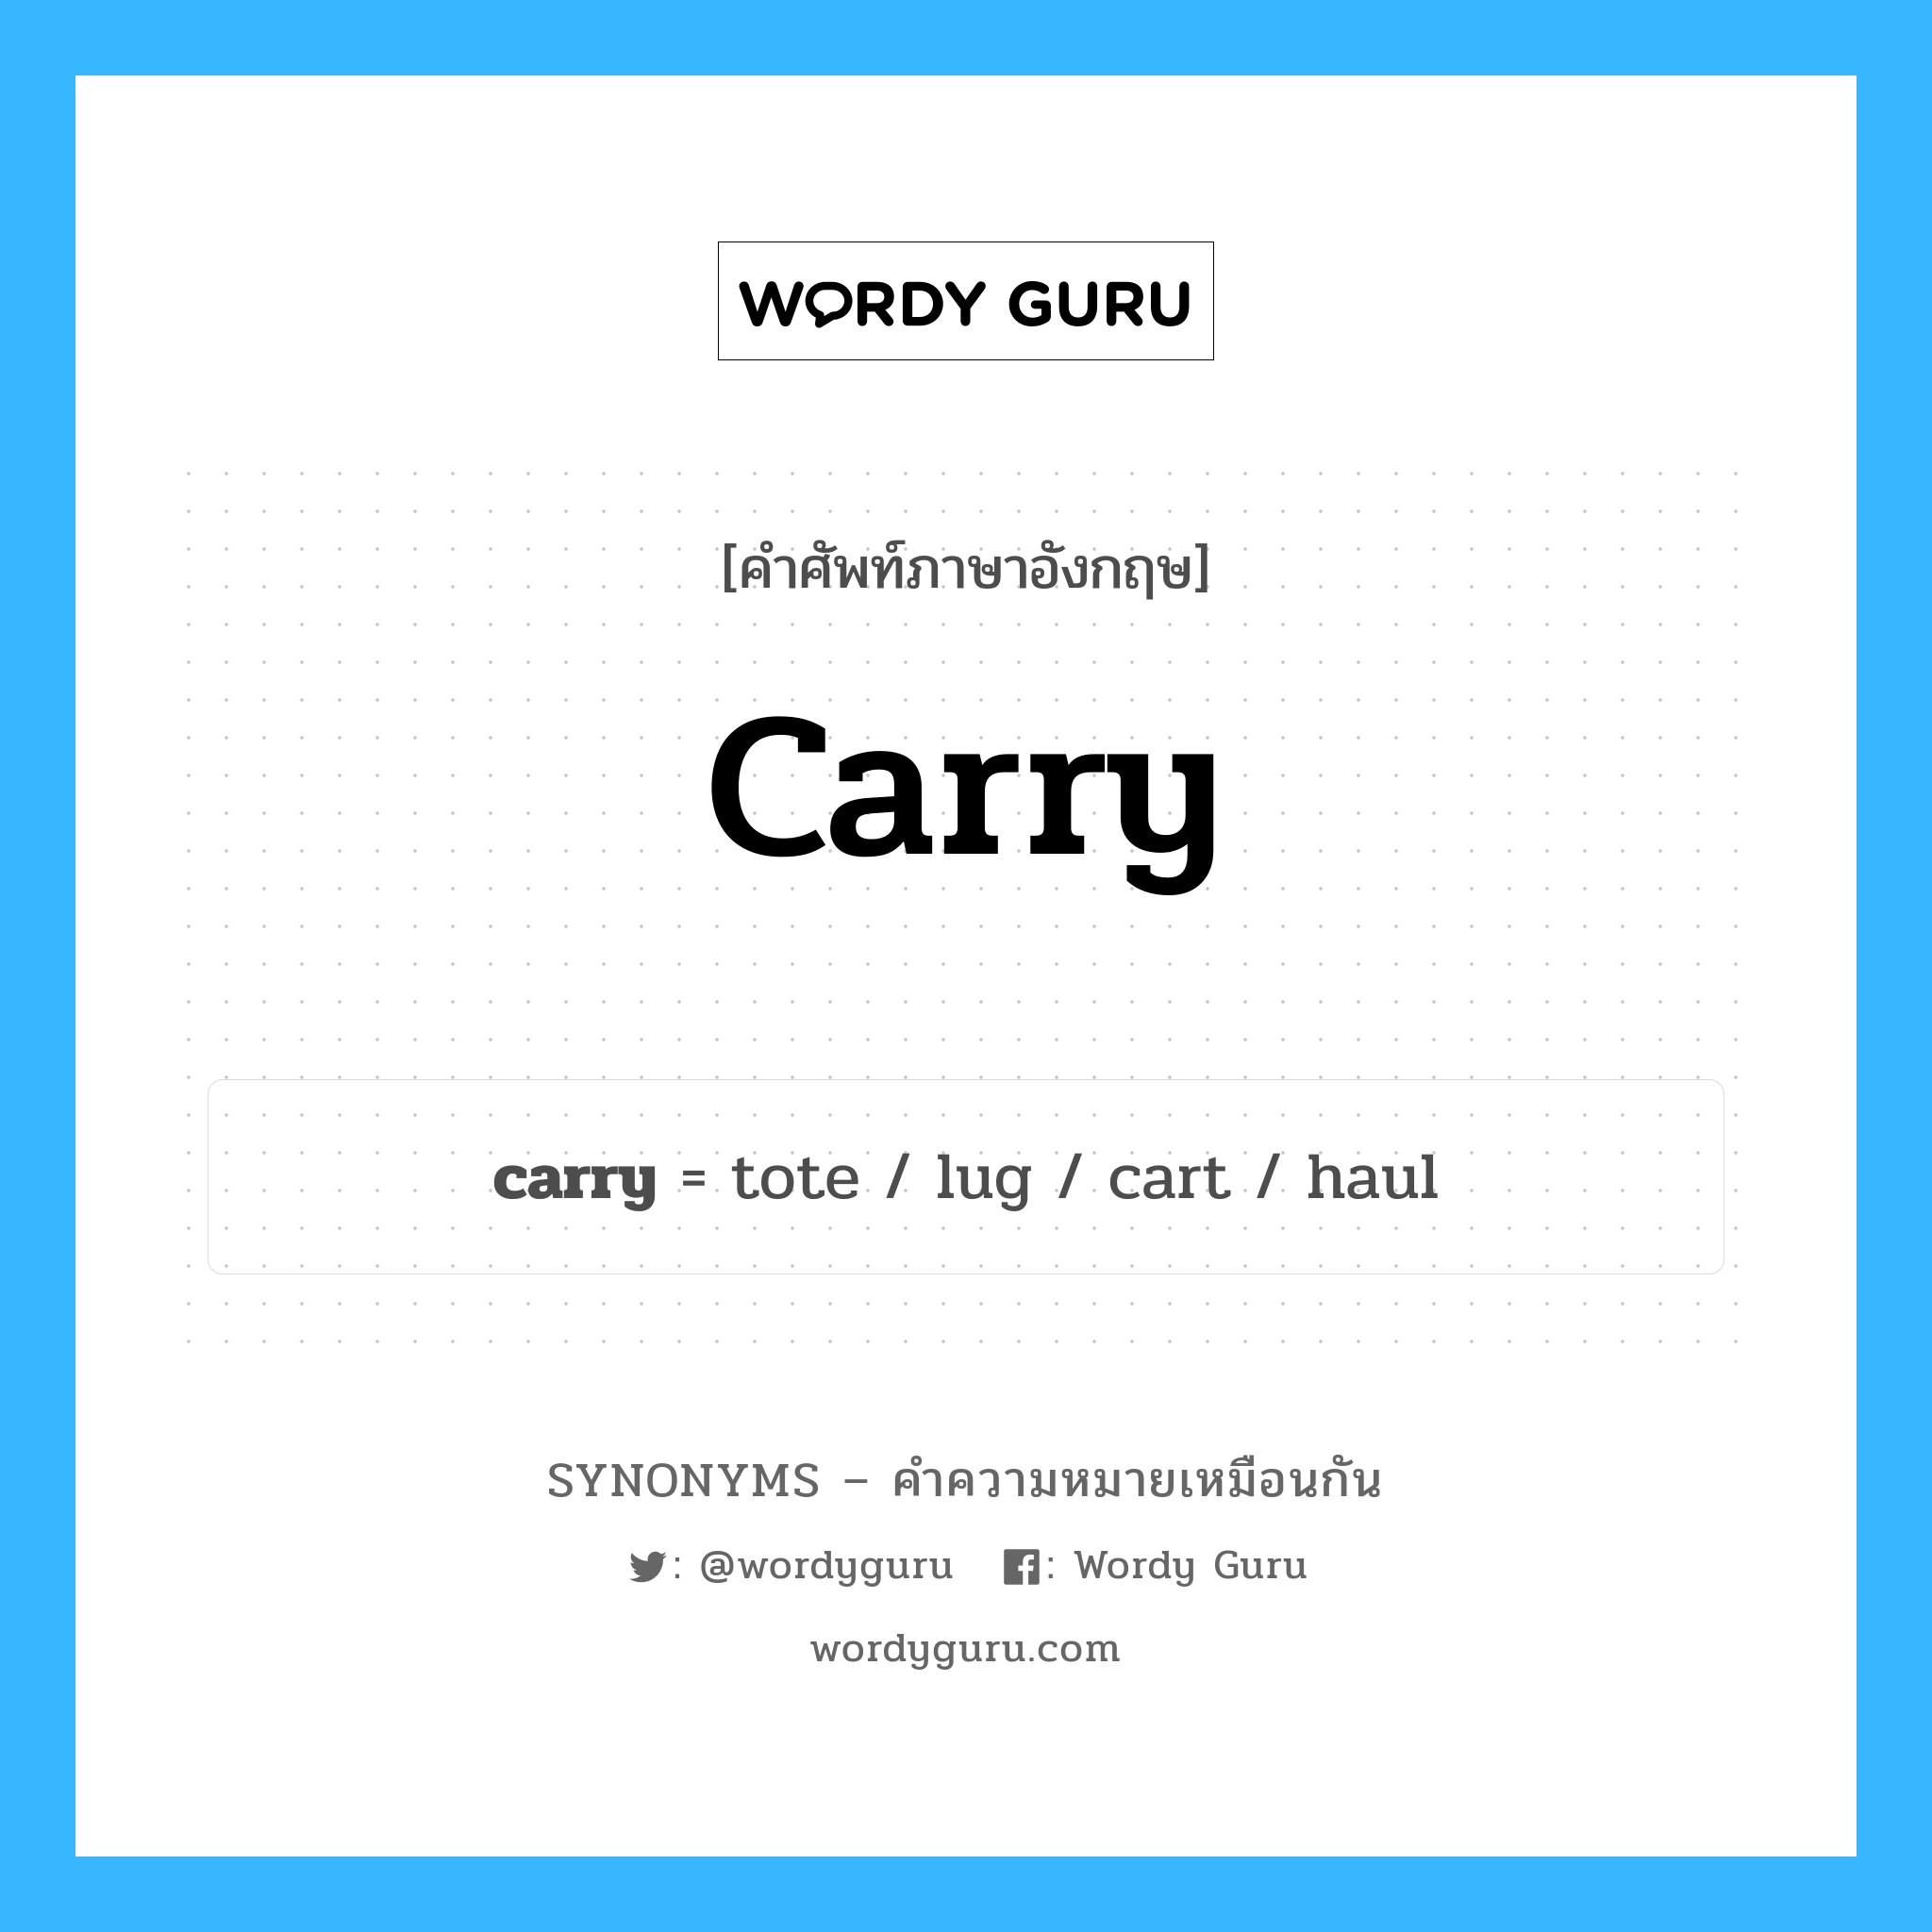 tote เป็นหนึ่งใน carry และมีคำอื่น ๆ อีกดังนี้, คำศัพท์ภาษาอังกฤษ tote ความหมายคล้ายกันกับ carry แปลว่า กระเป๋า หมวด carry